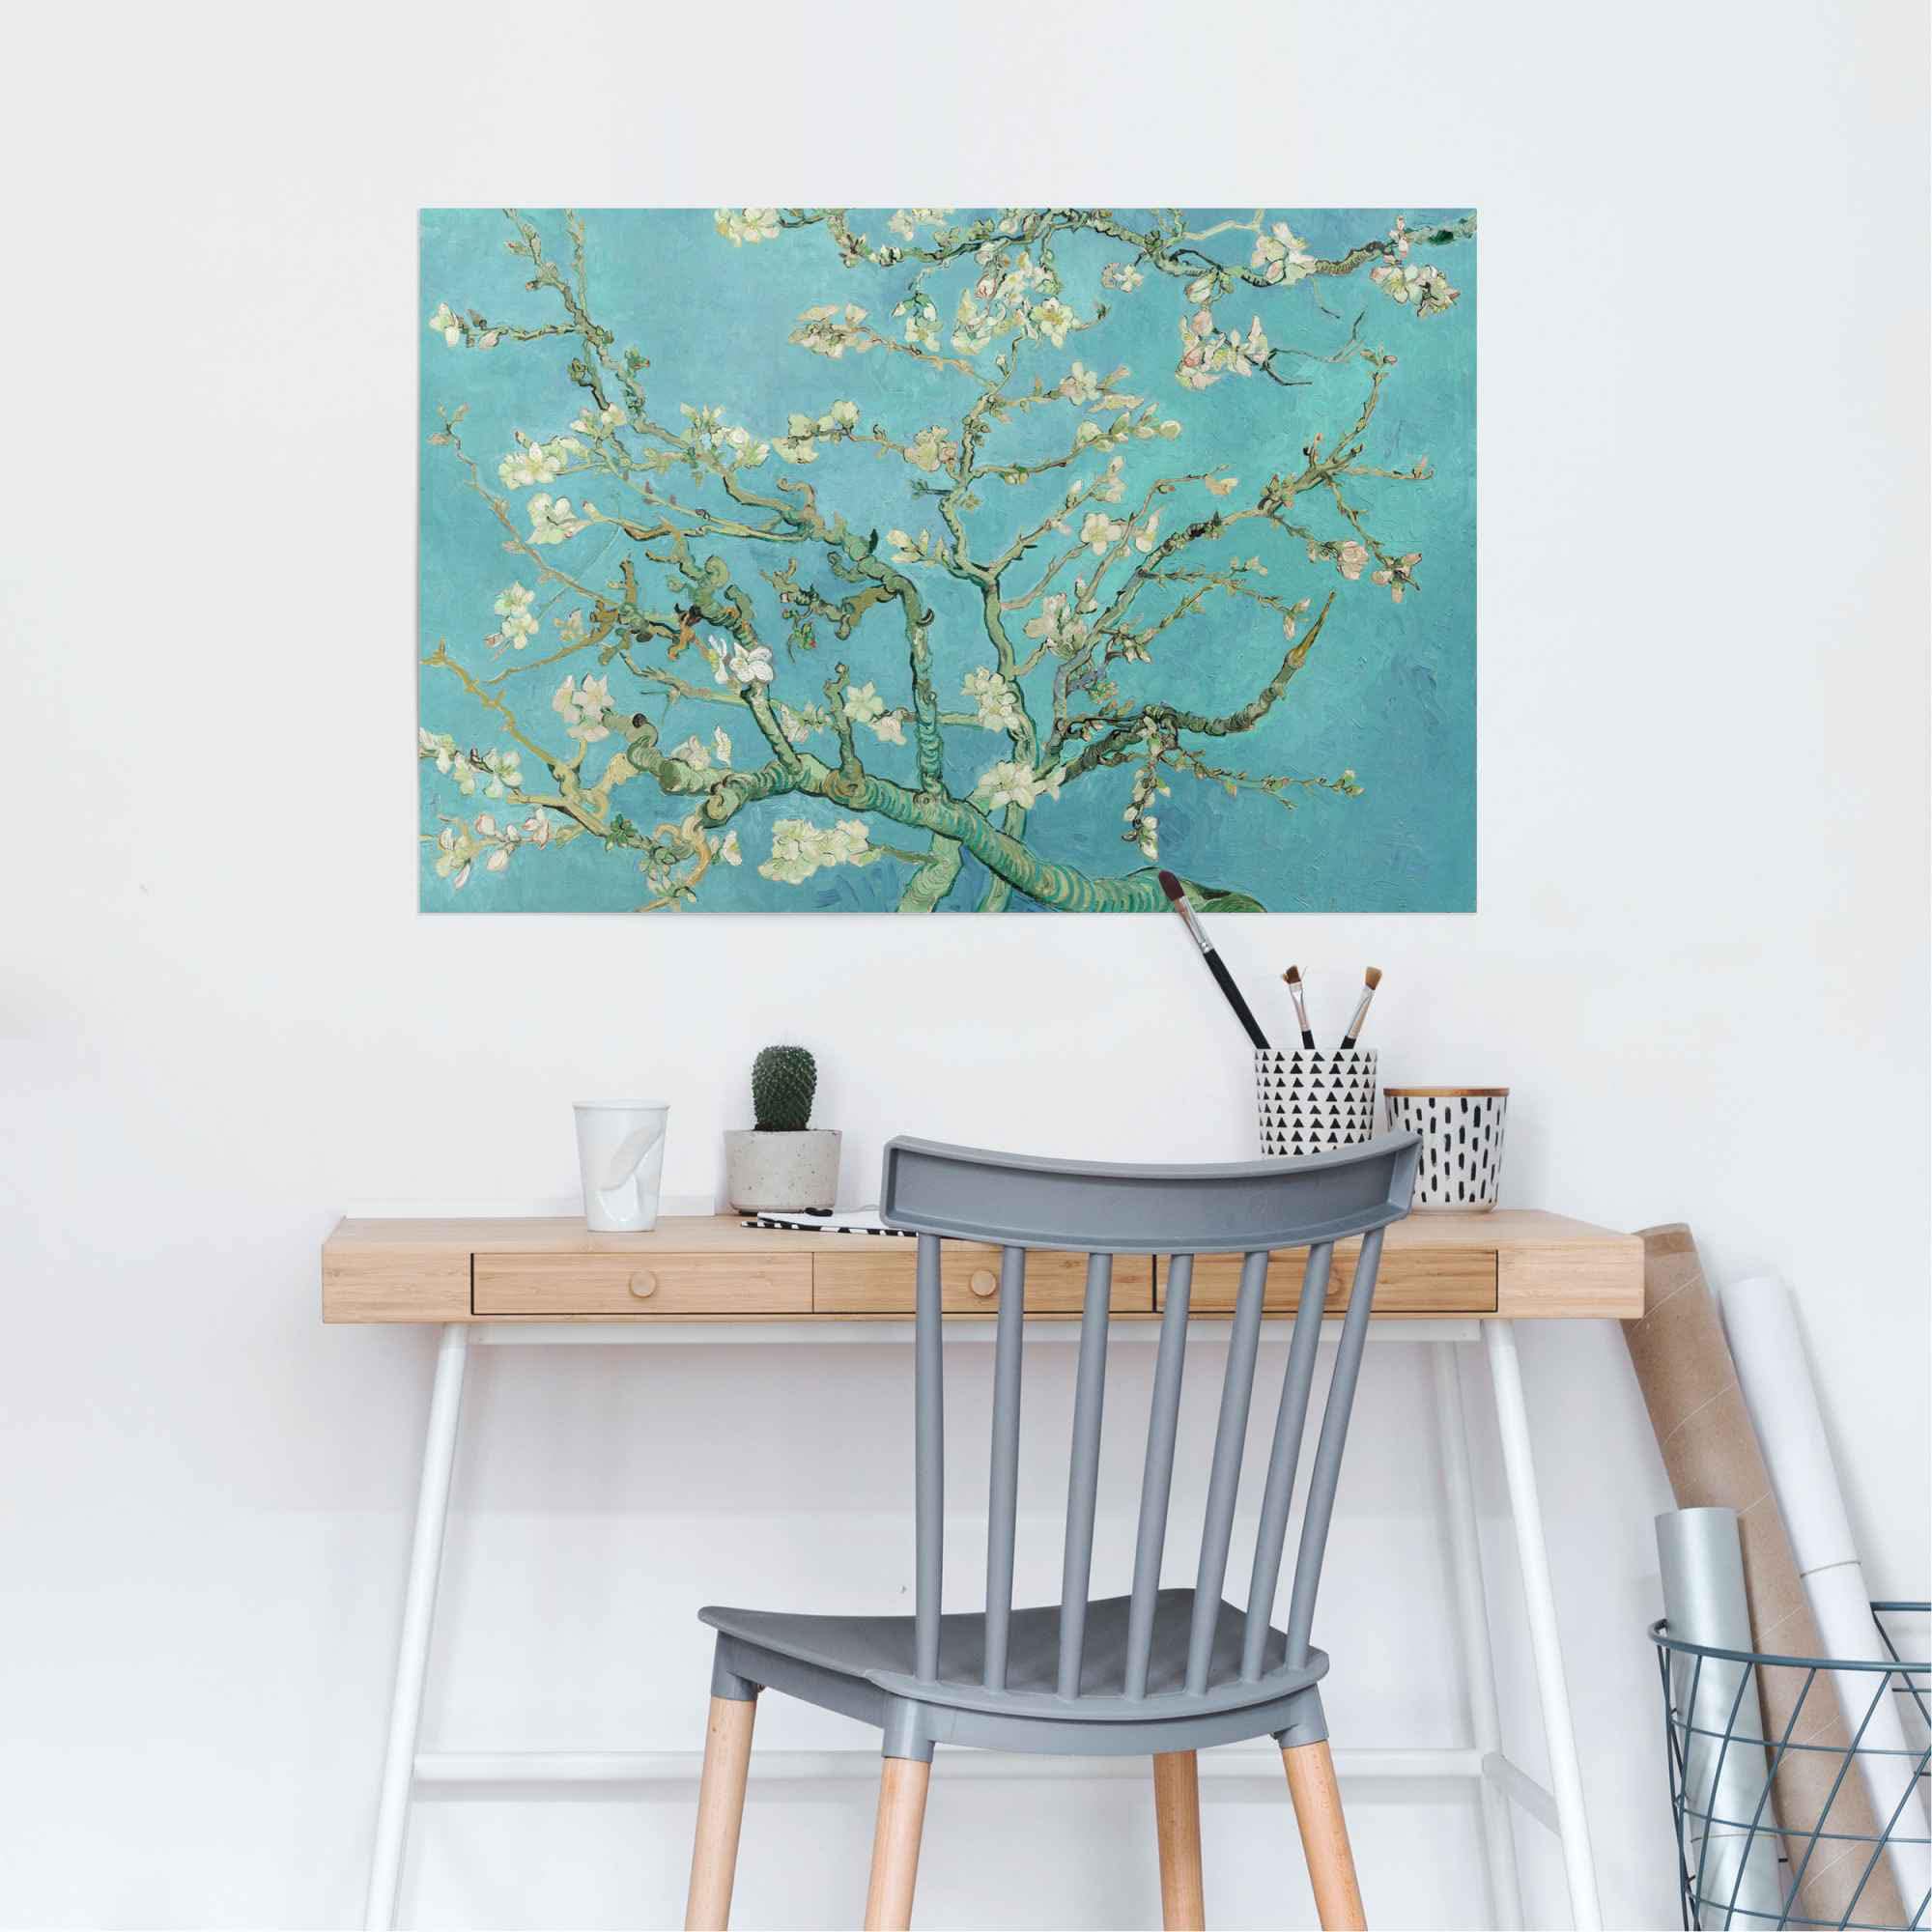 Reinders! Poster »Poster Mandelblüte Vincent Jelmoli-Online van im entdecken St.) Blumen, Gogh«, (1 Shop